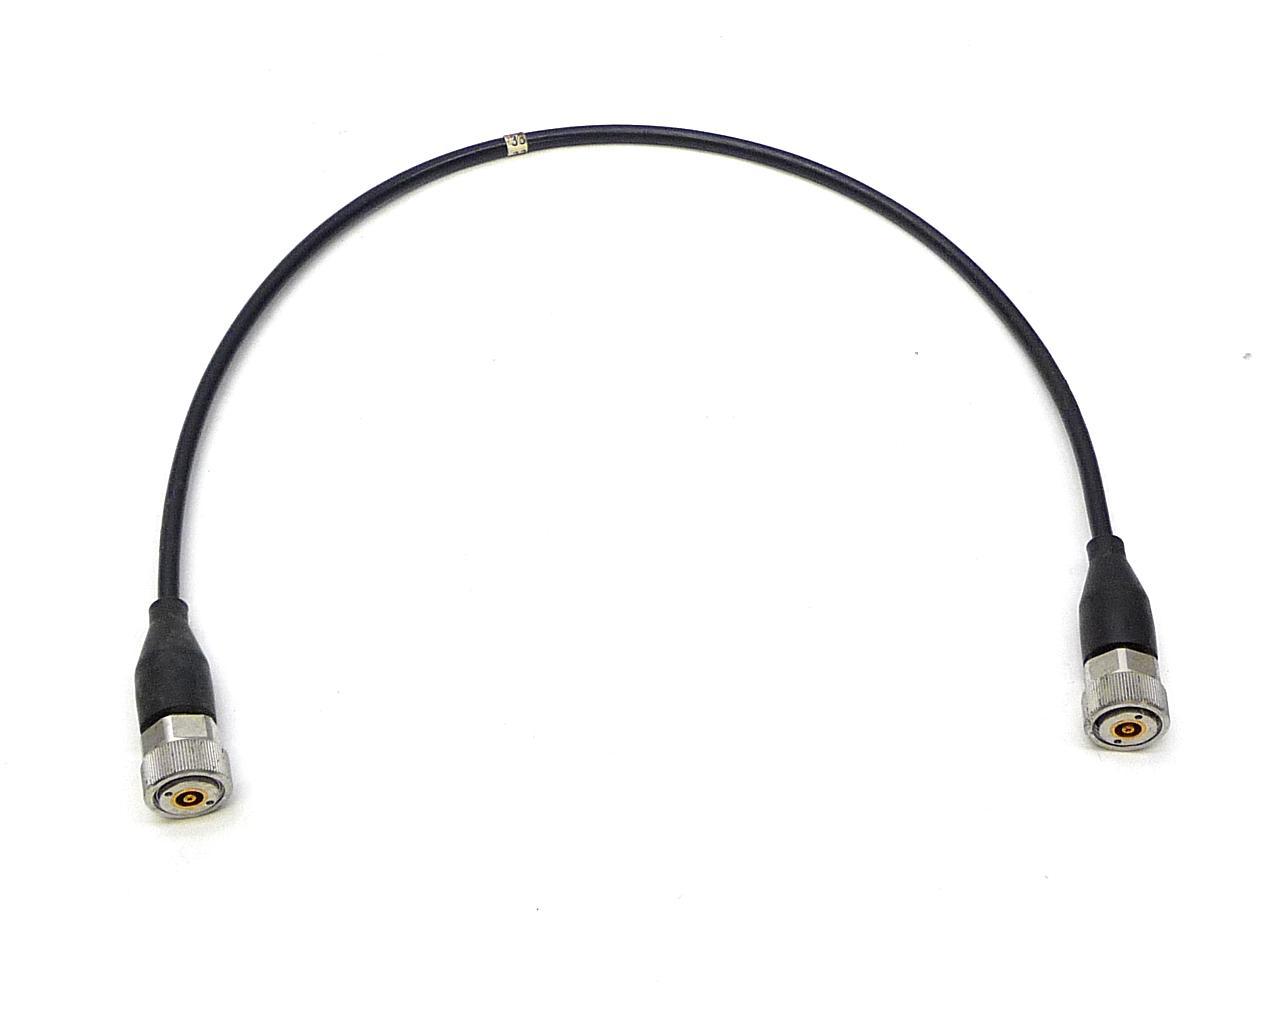 Hp agilent 8120-4779 apc-7 precision test port cable